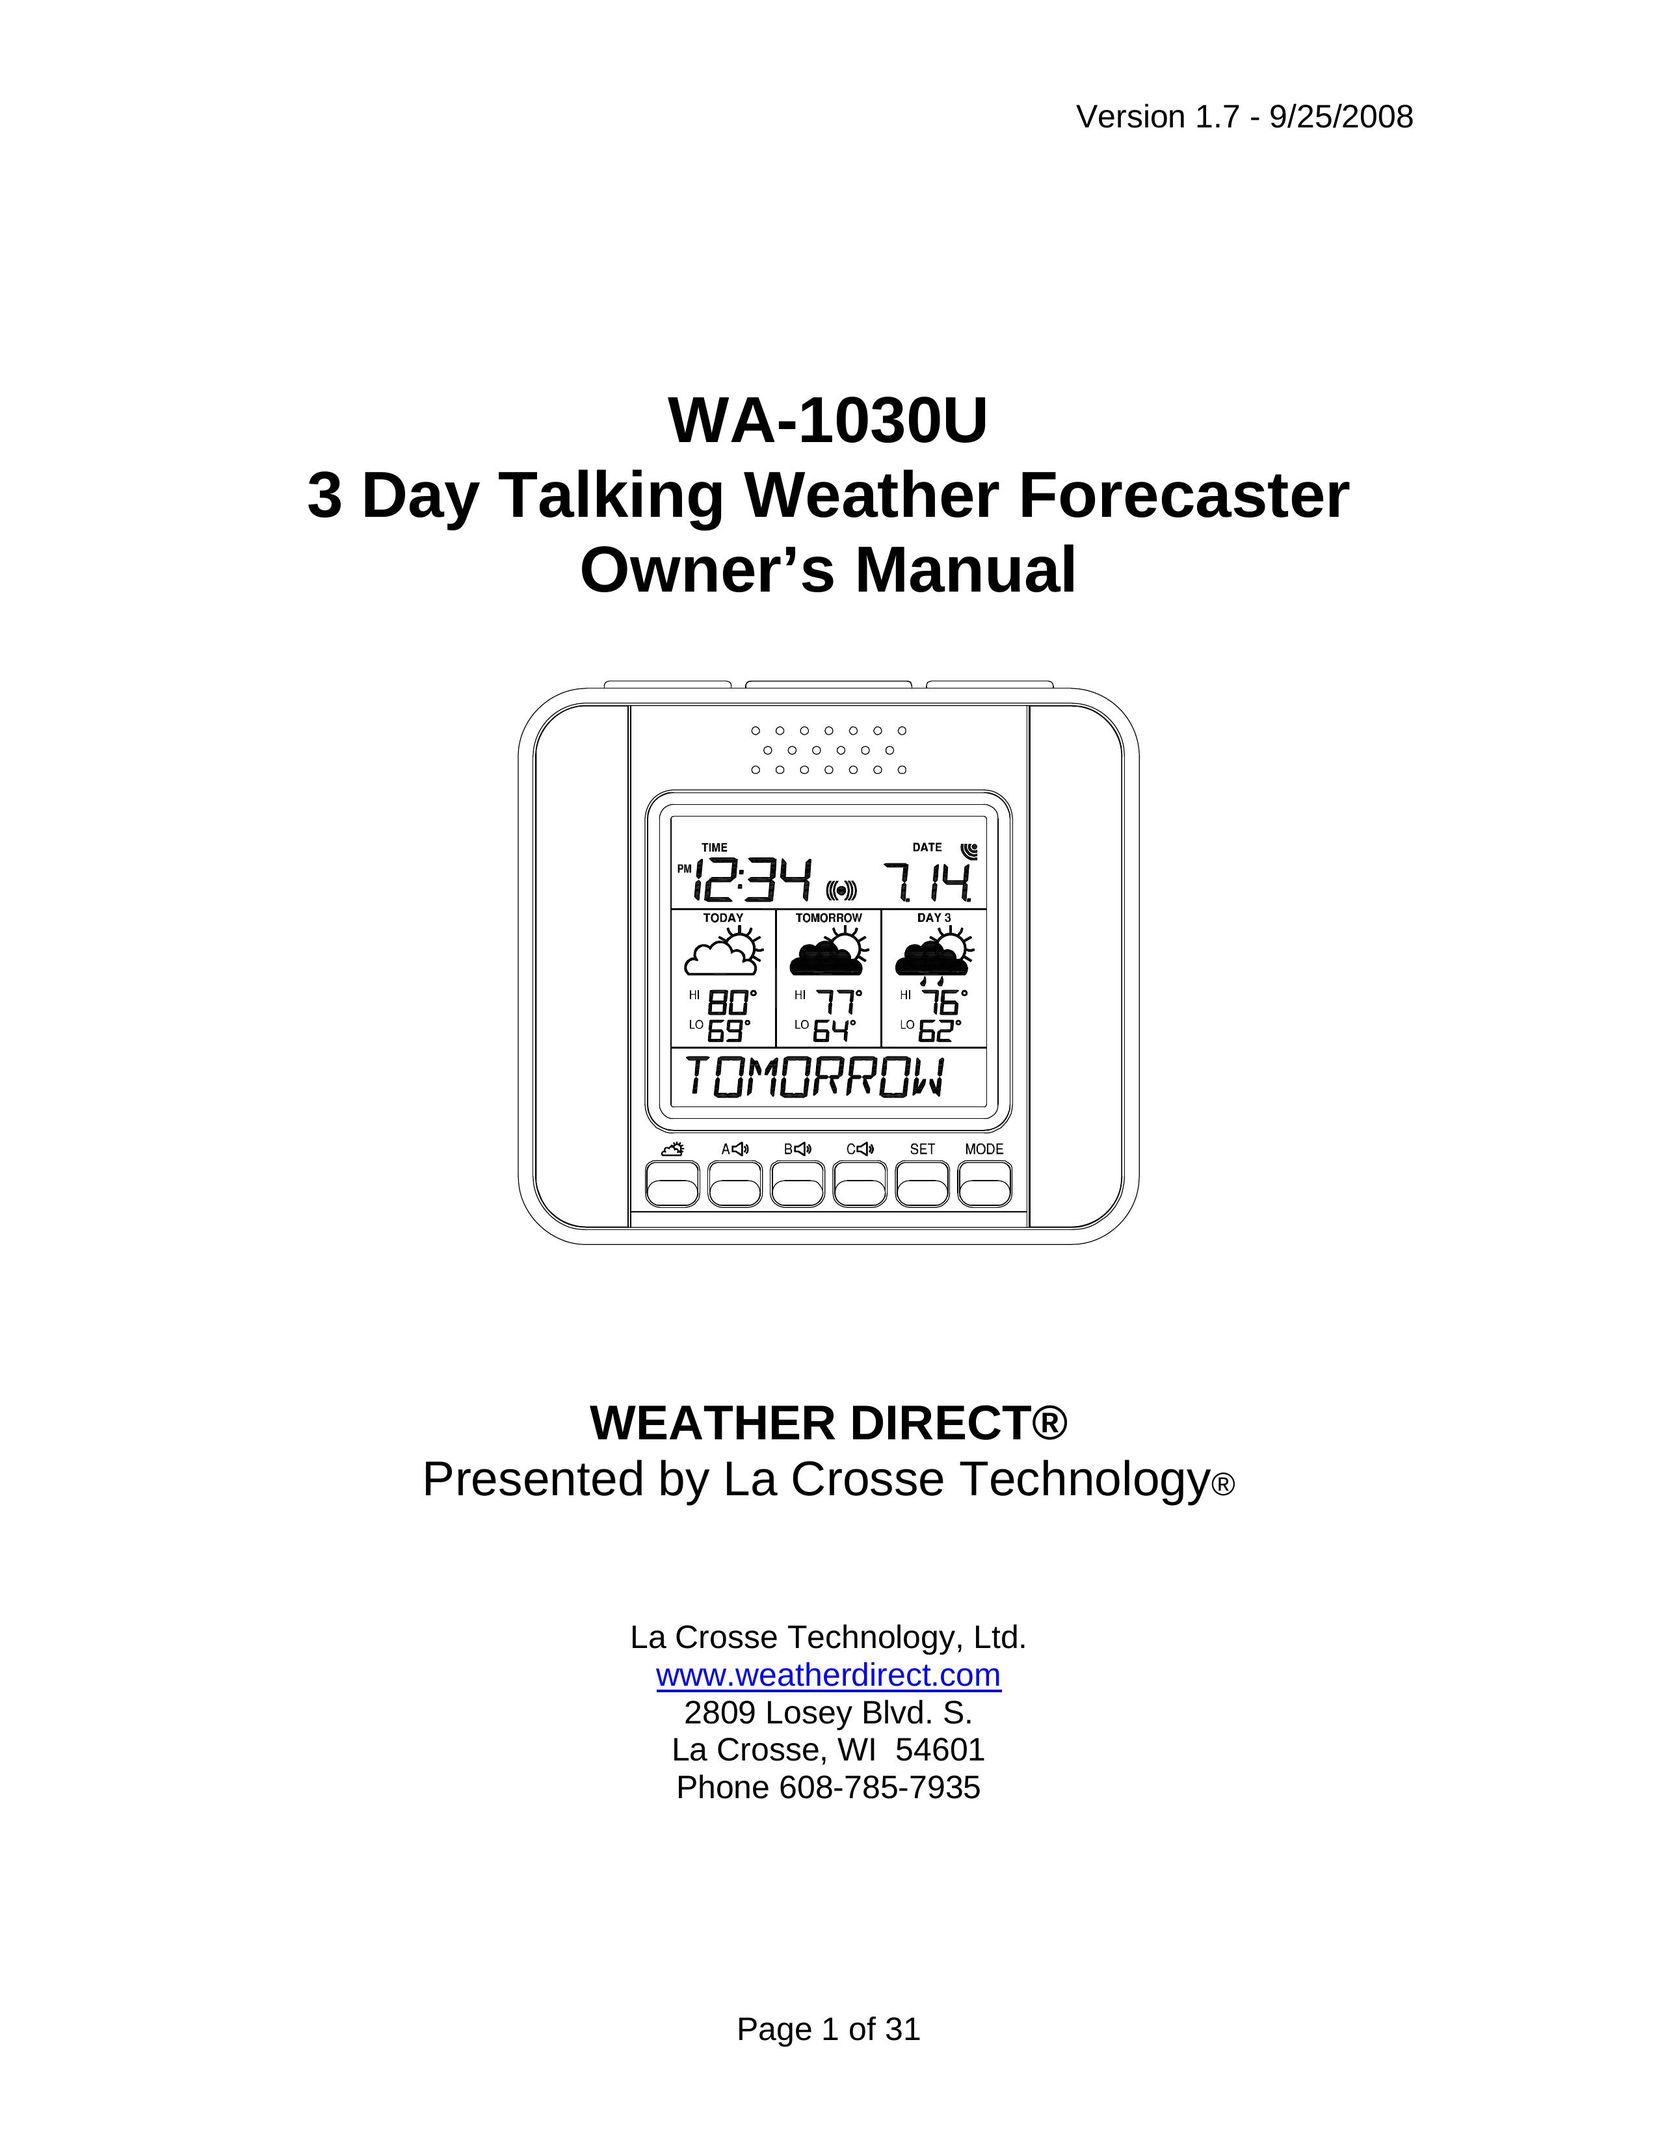 La Crosse Technology WA-1030U Portable Radio User Manual